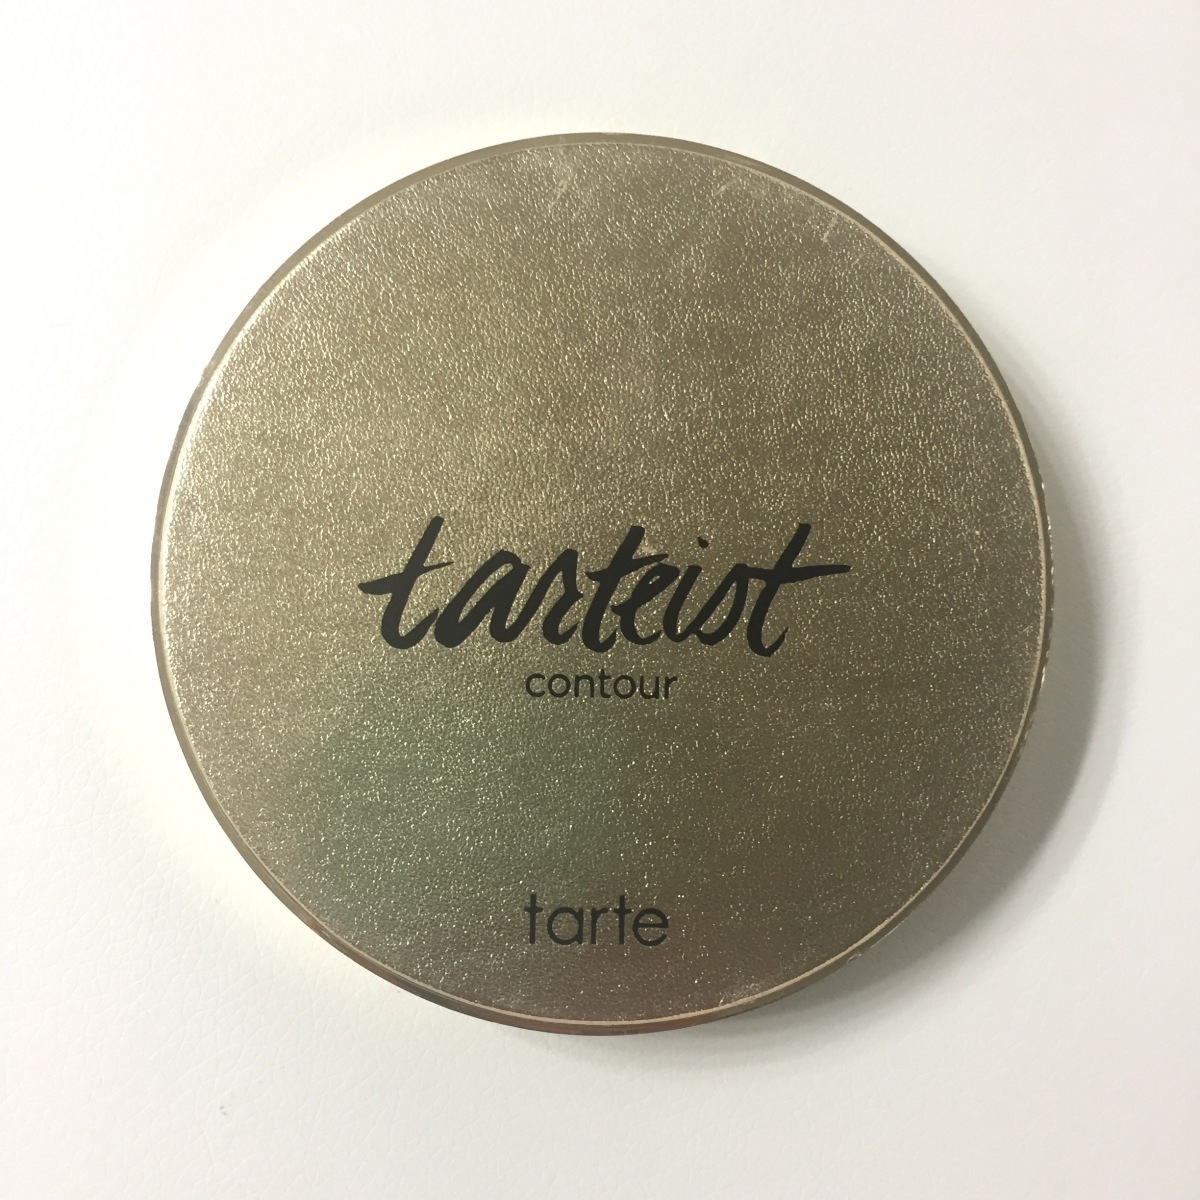 Tarte Tarteist Contour Palette + Sculpt & Slim Brush - Review and